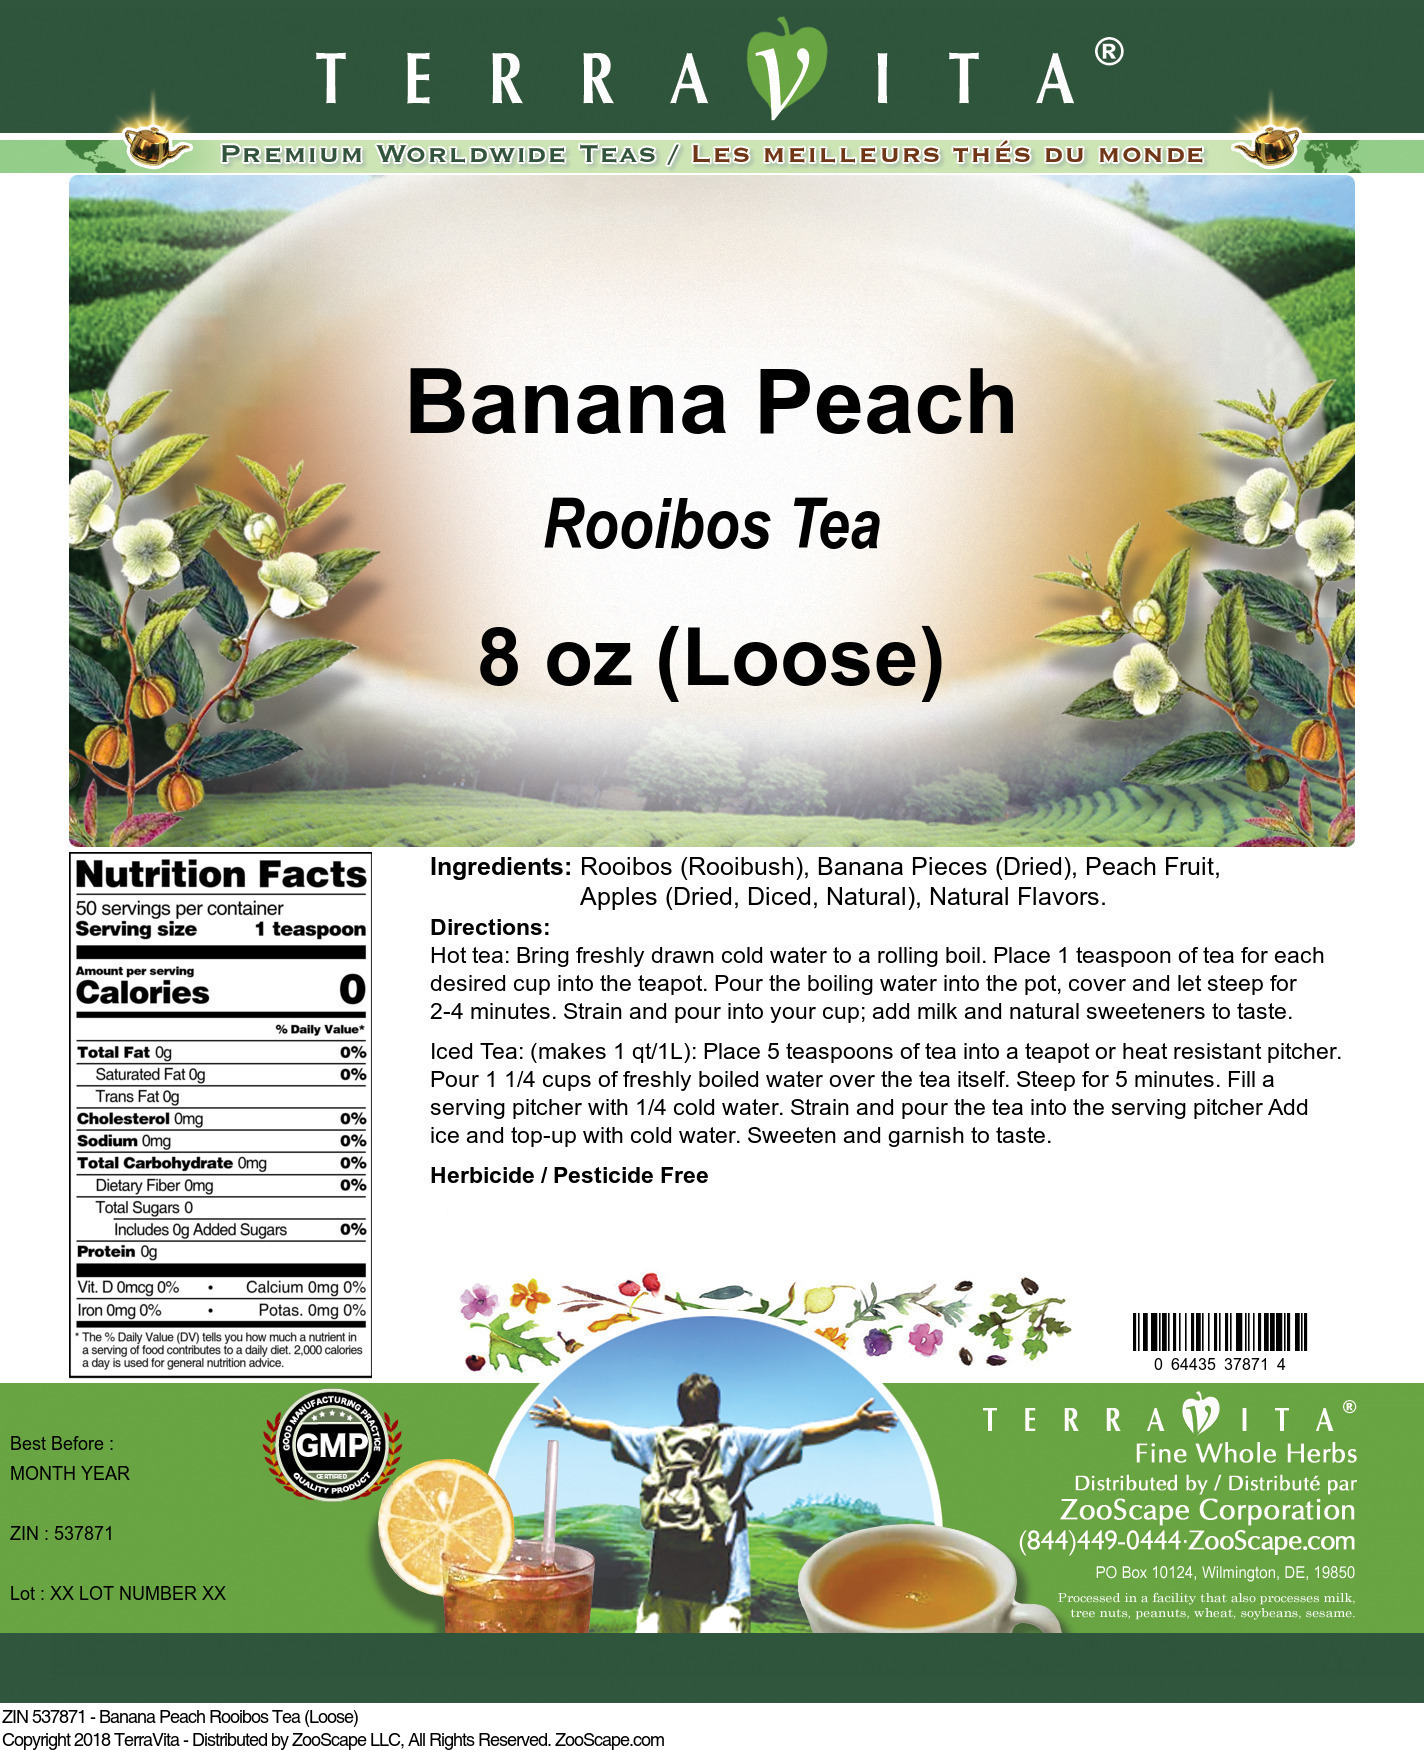 Banana Peach Rooibos Tea (Loose) - Label